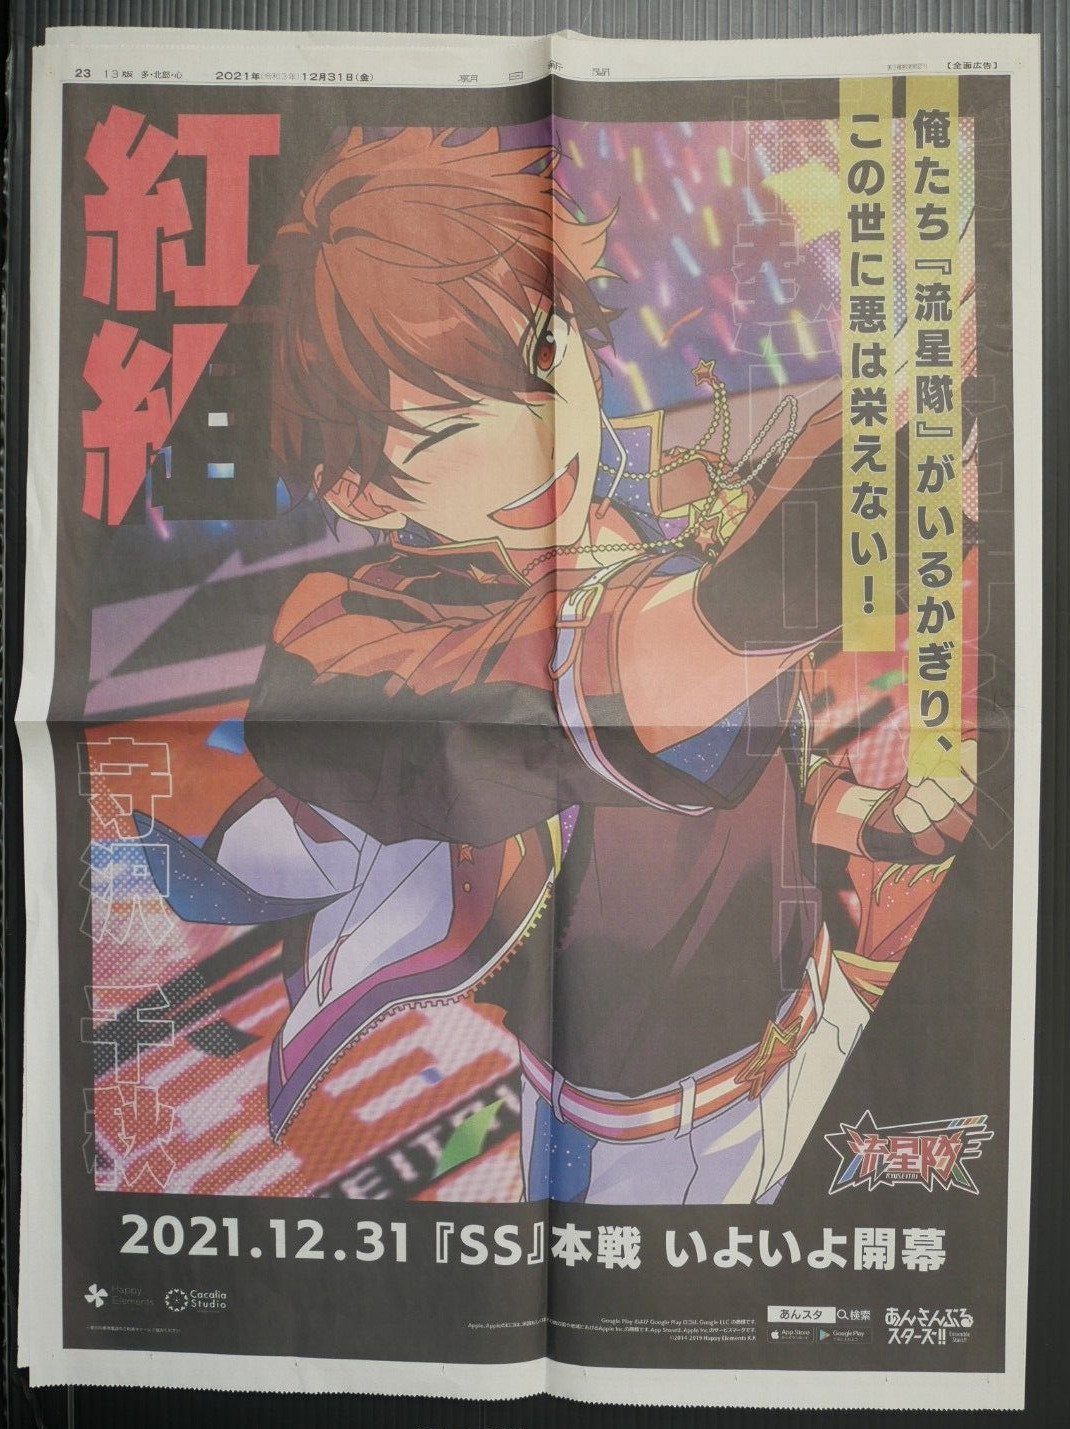 Ensemble Stars Newspaper Advertisement \'Ryuseitai / Chiaki Morisawa\' from JAPAN